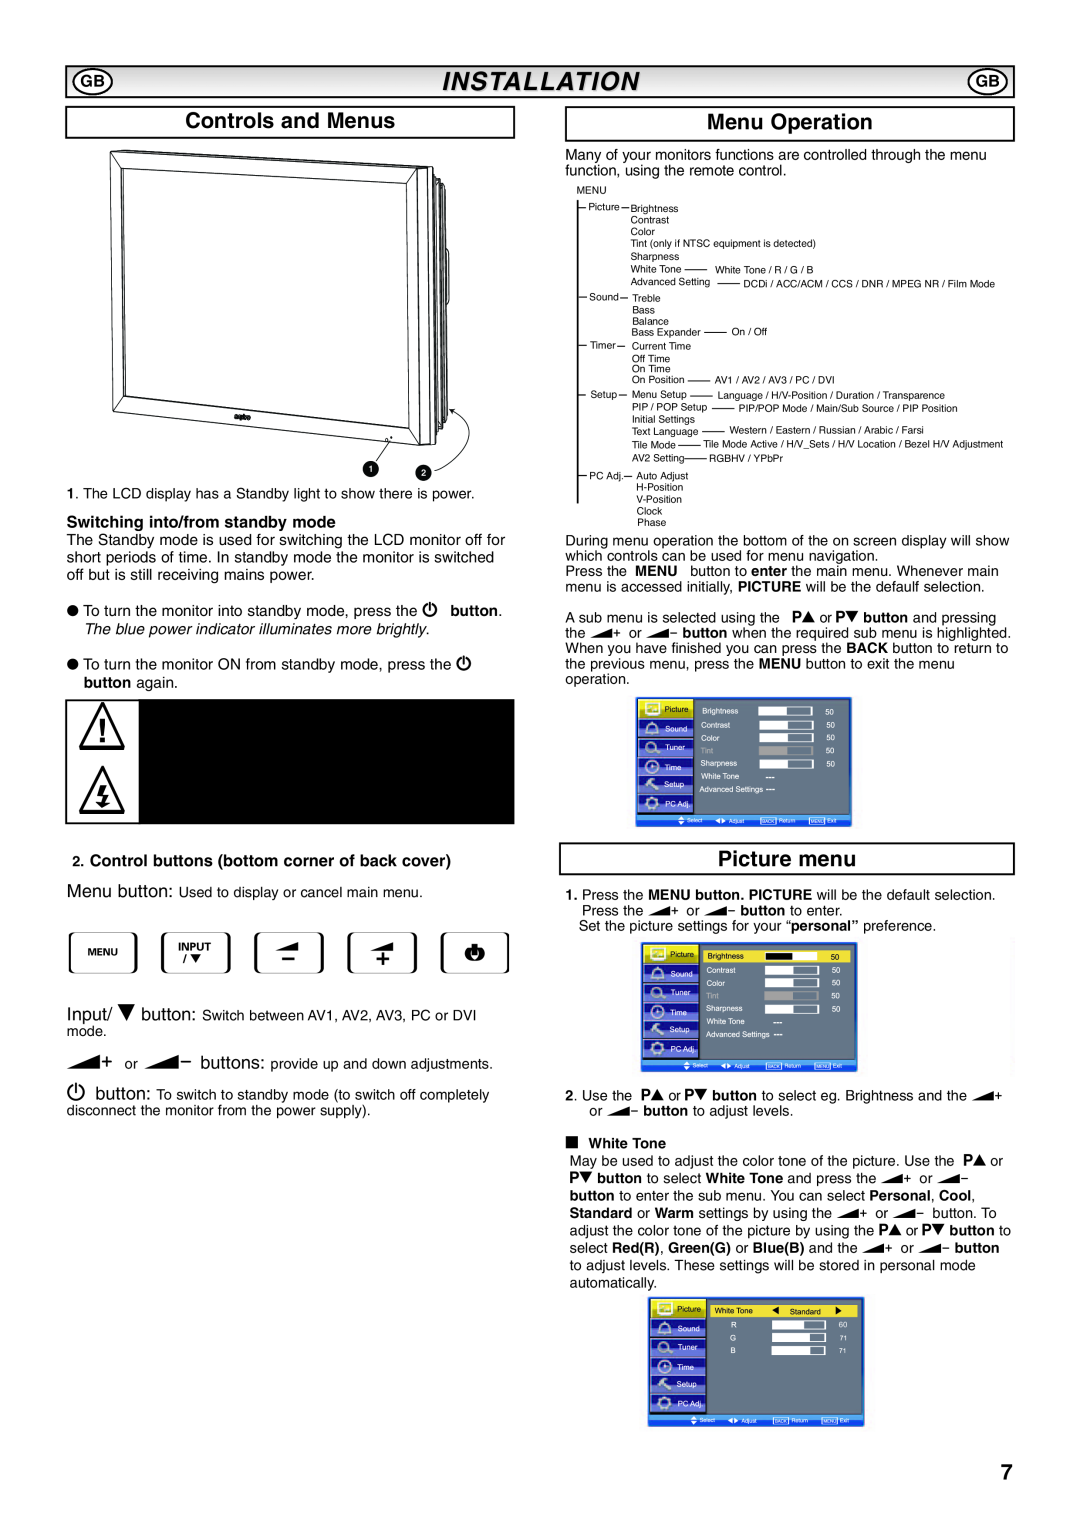 Sanyo CE52LH1R instruction manual Controls and Menus, Menu Operation, Picture menu, Gbinstallation, White Tone 